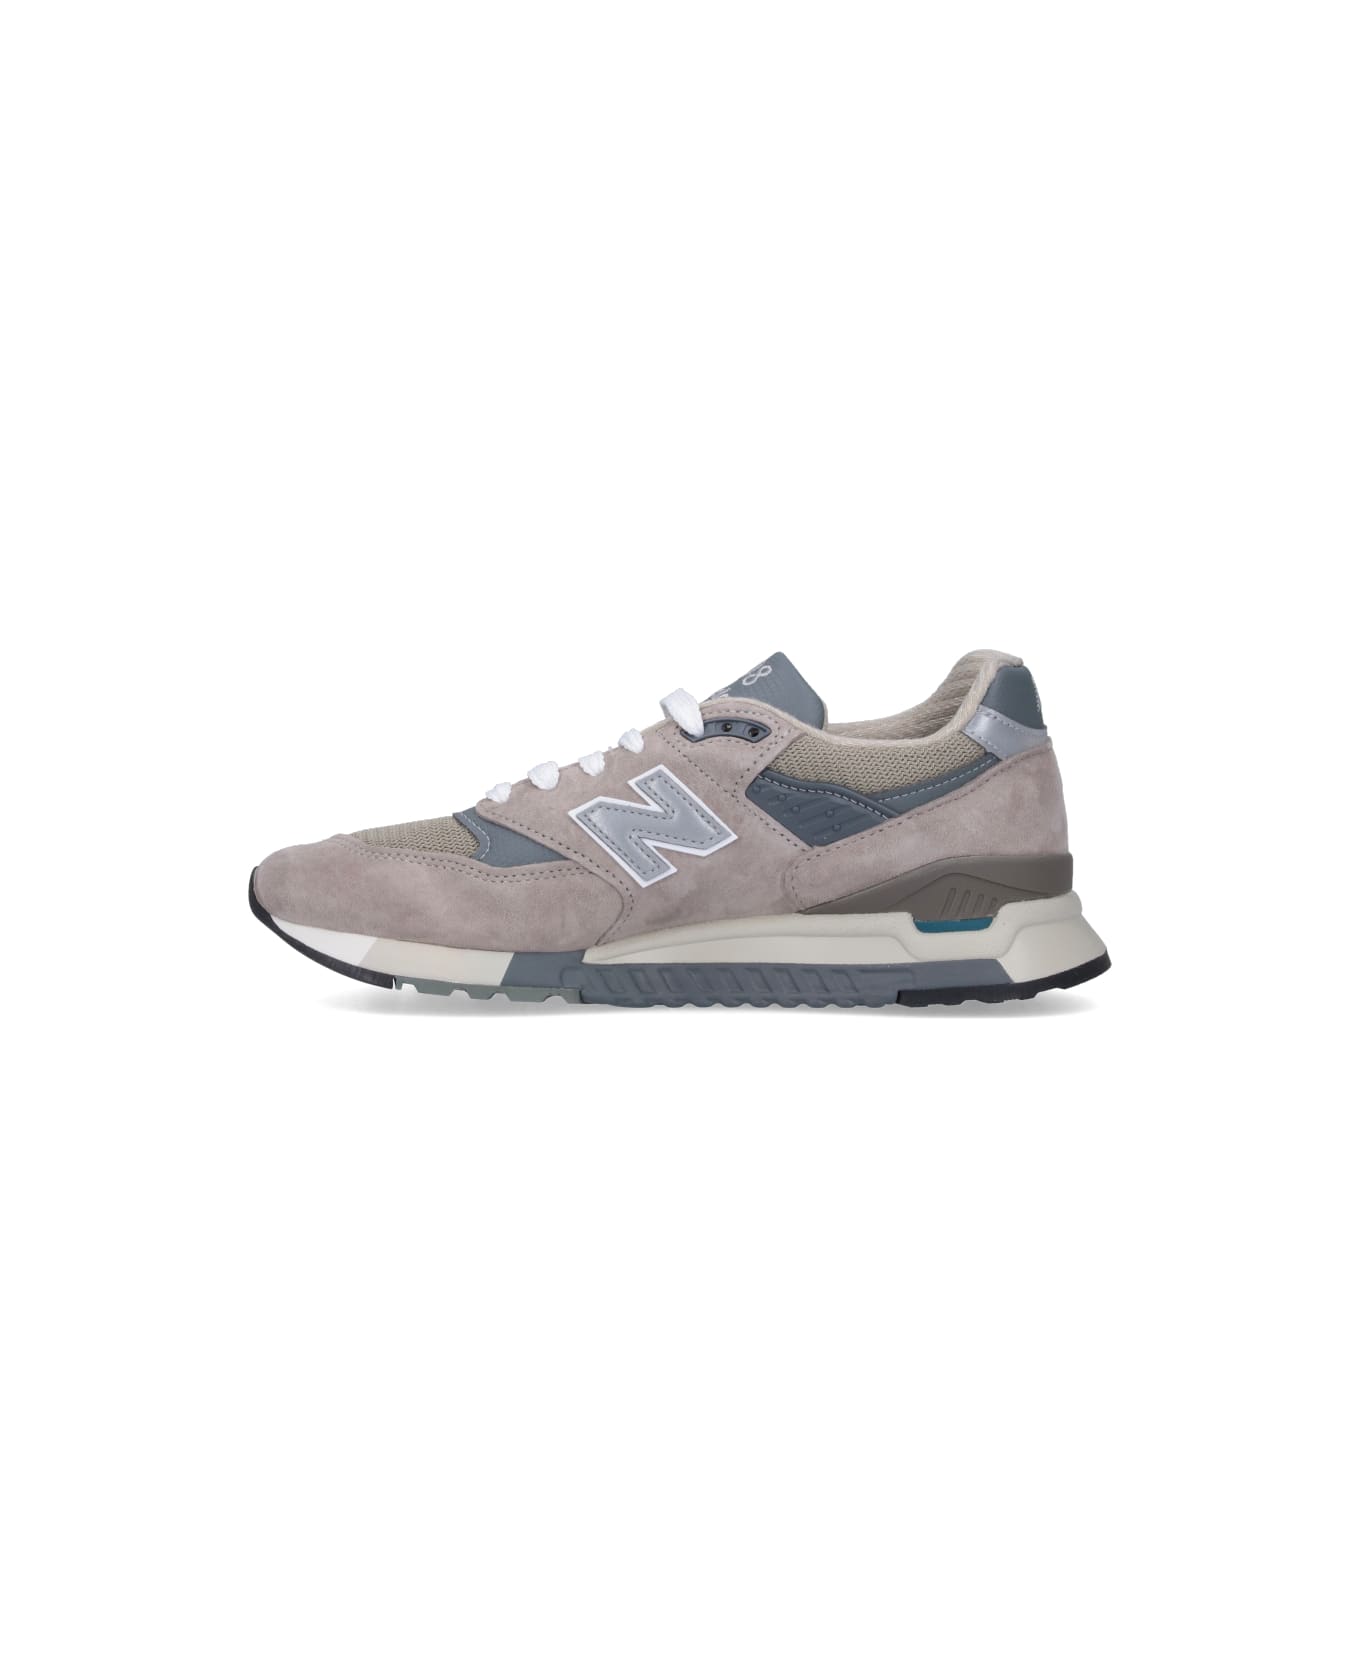 New Balance "998 Core" Sneakers - Gray